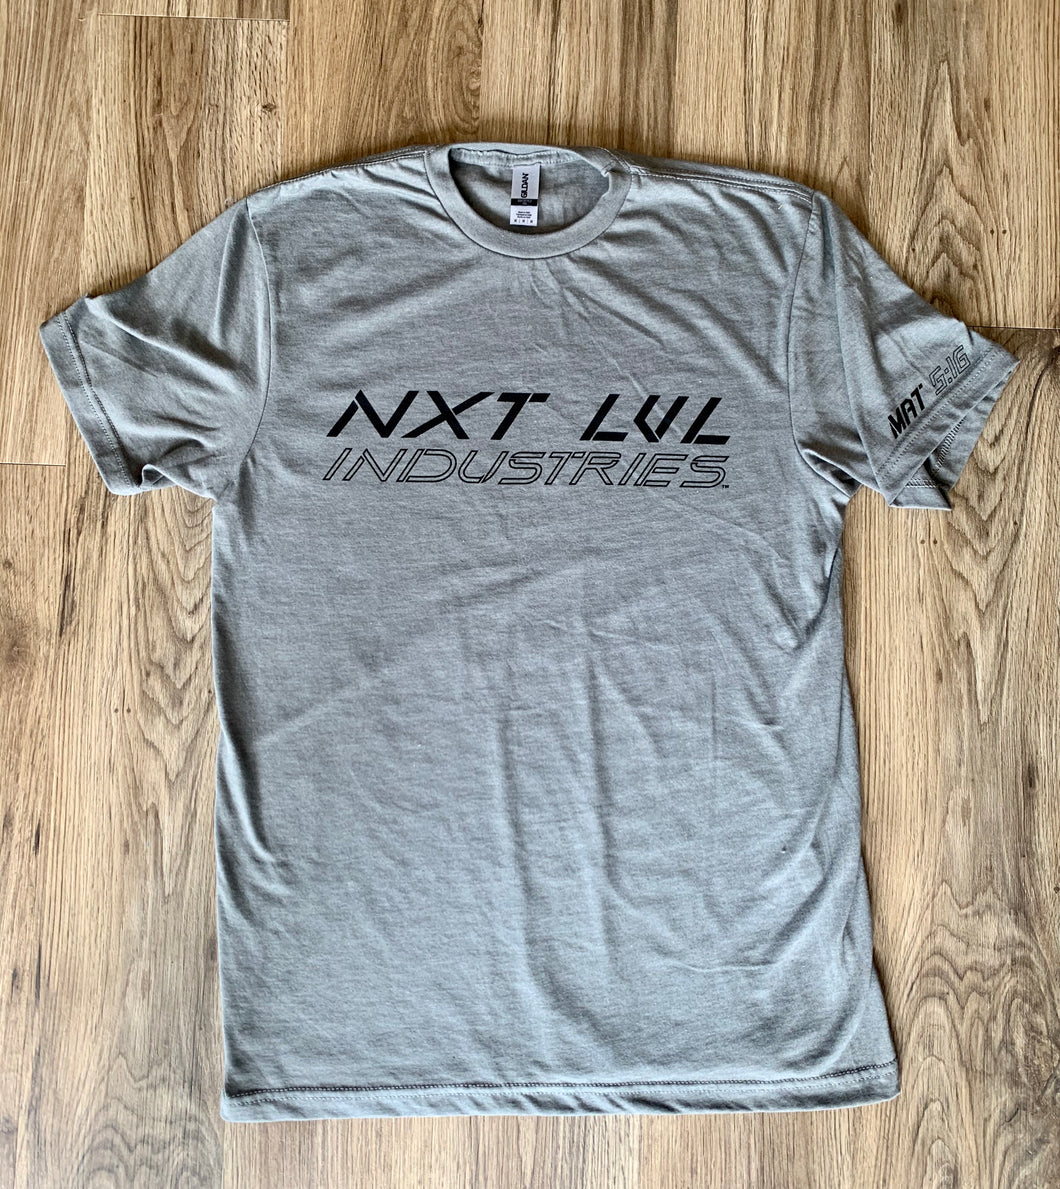 Grey NXT LVL Ind. T-shirt